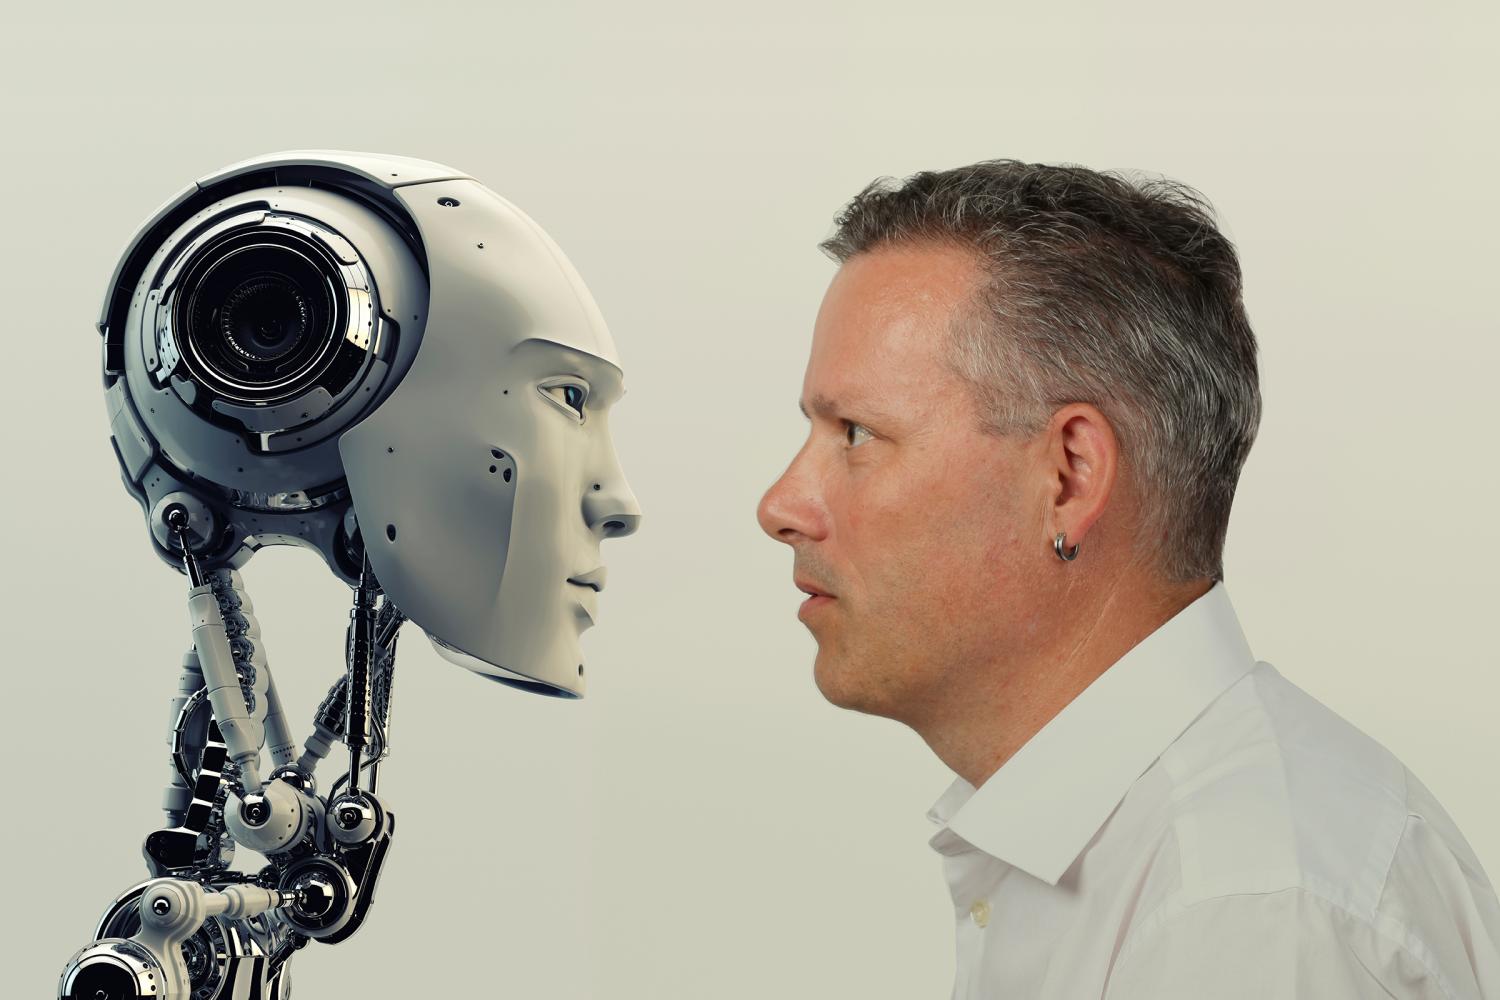 “Artificial intelligence is still in its infancy”